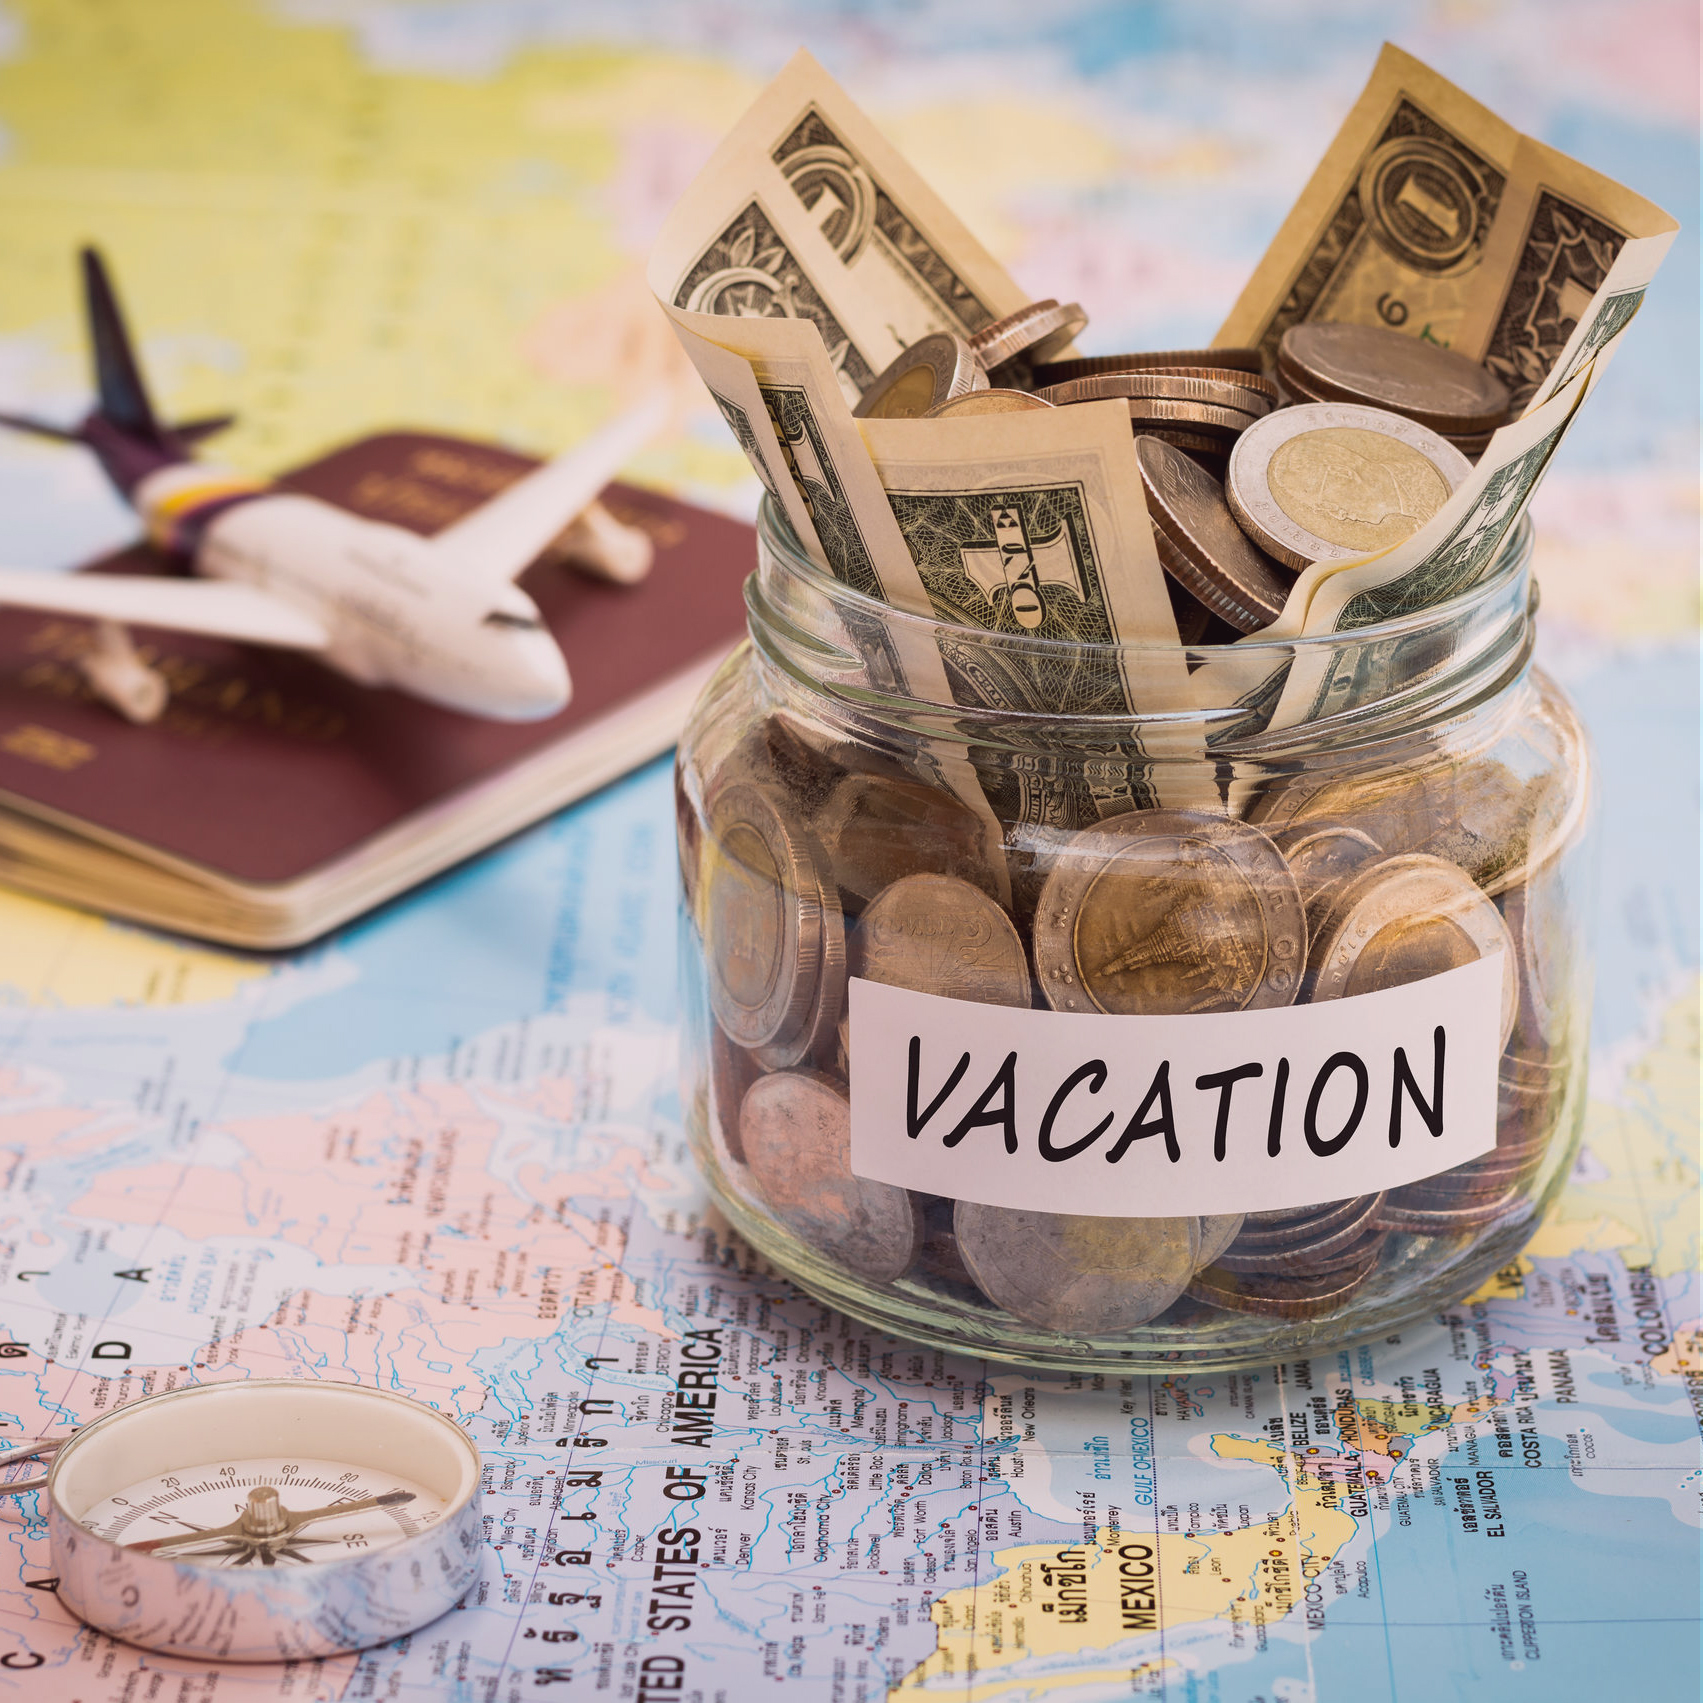 job benefits: vacation savings fund